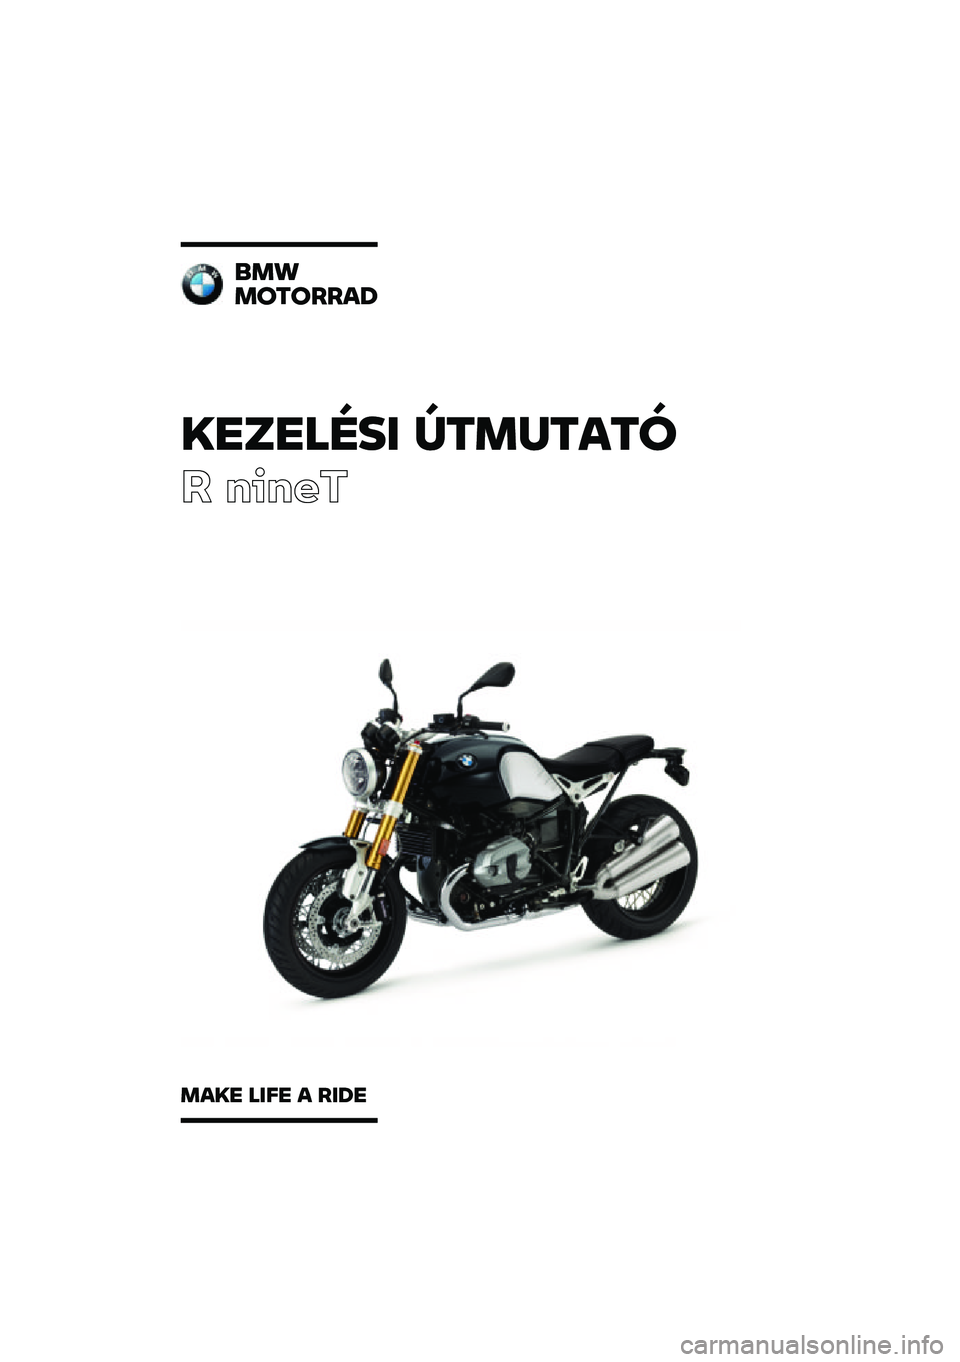 BMW MOTORRAD R NINE T 2020  Kezelési útmutató (in Hungarian) �������\b�	 �
�\f�
��\f��\f�
� �����
��
�
�
��\f�����
�
��� ��	�� � ��	�� 